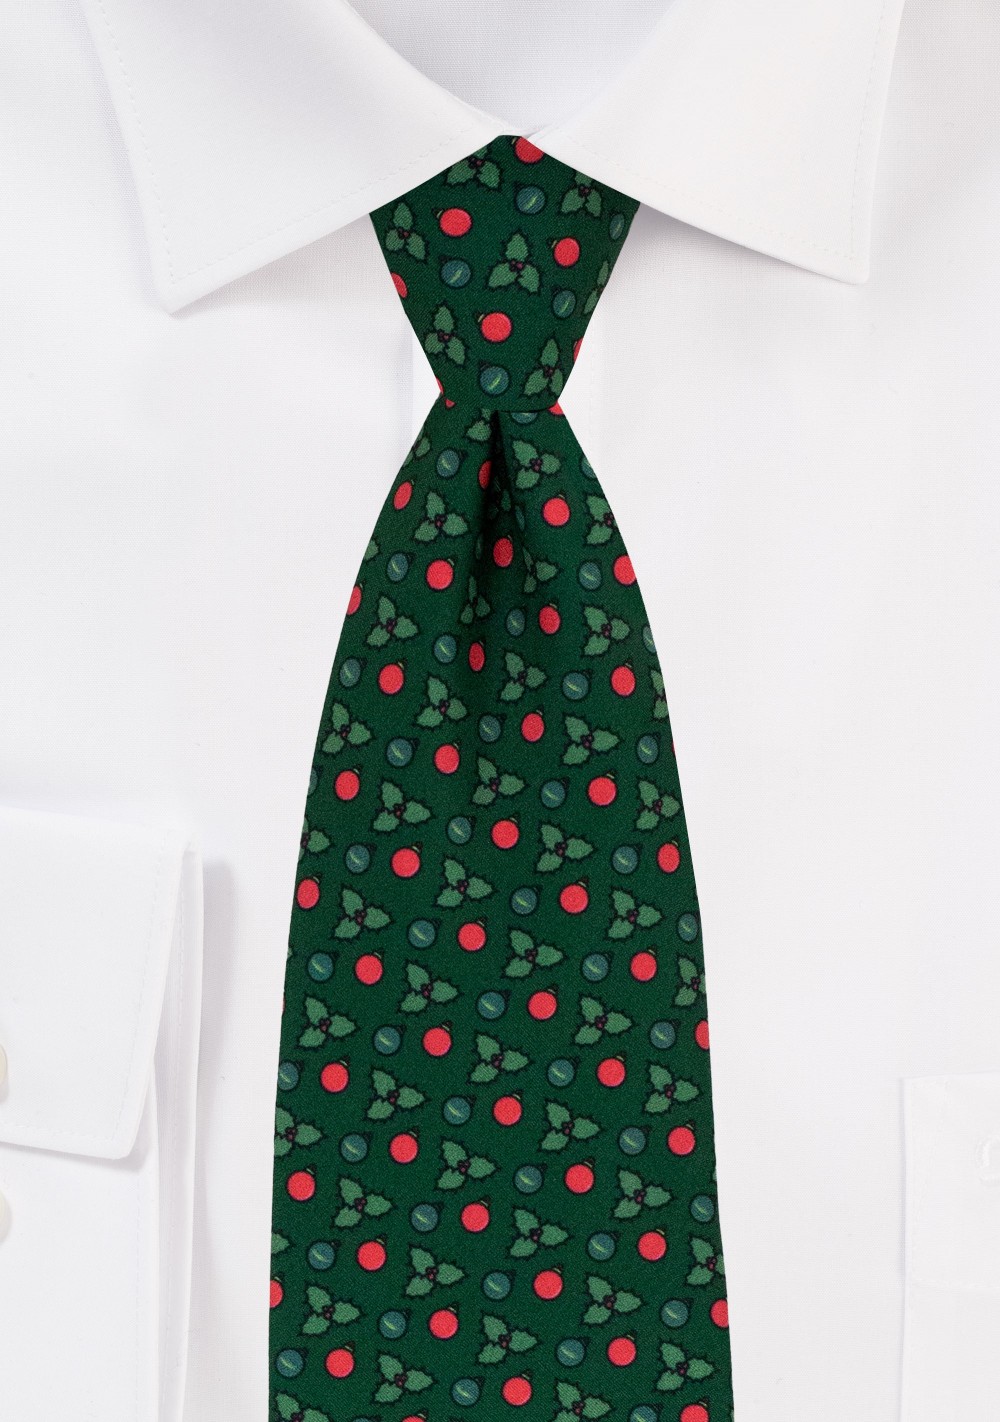 Holly Print Christmas Tie in Dark Green